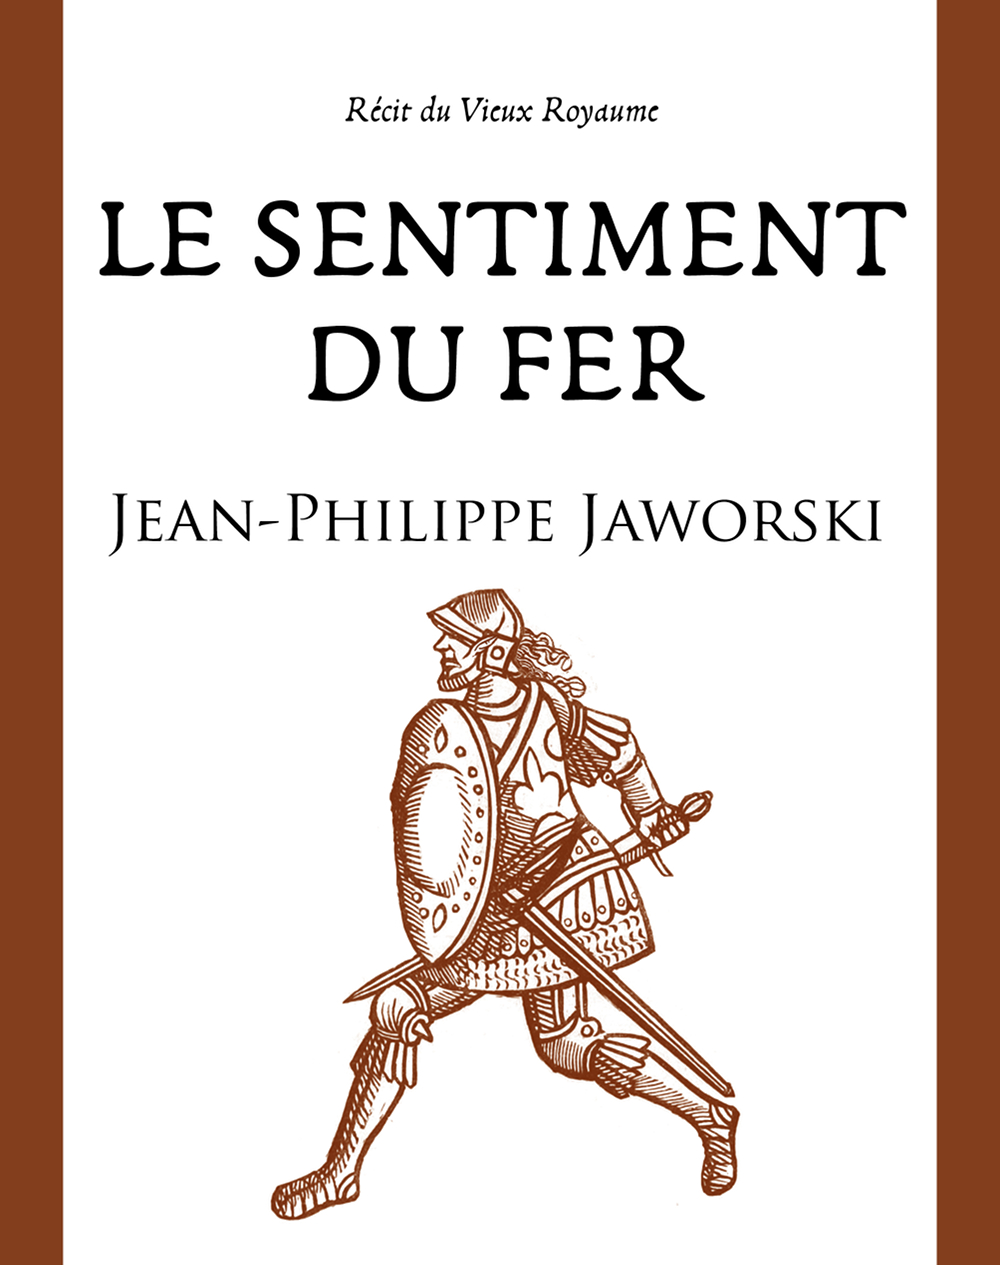 Jean-Philippe Jaworski: Le Sentiment du fer (EBook, French language, 2017)